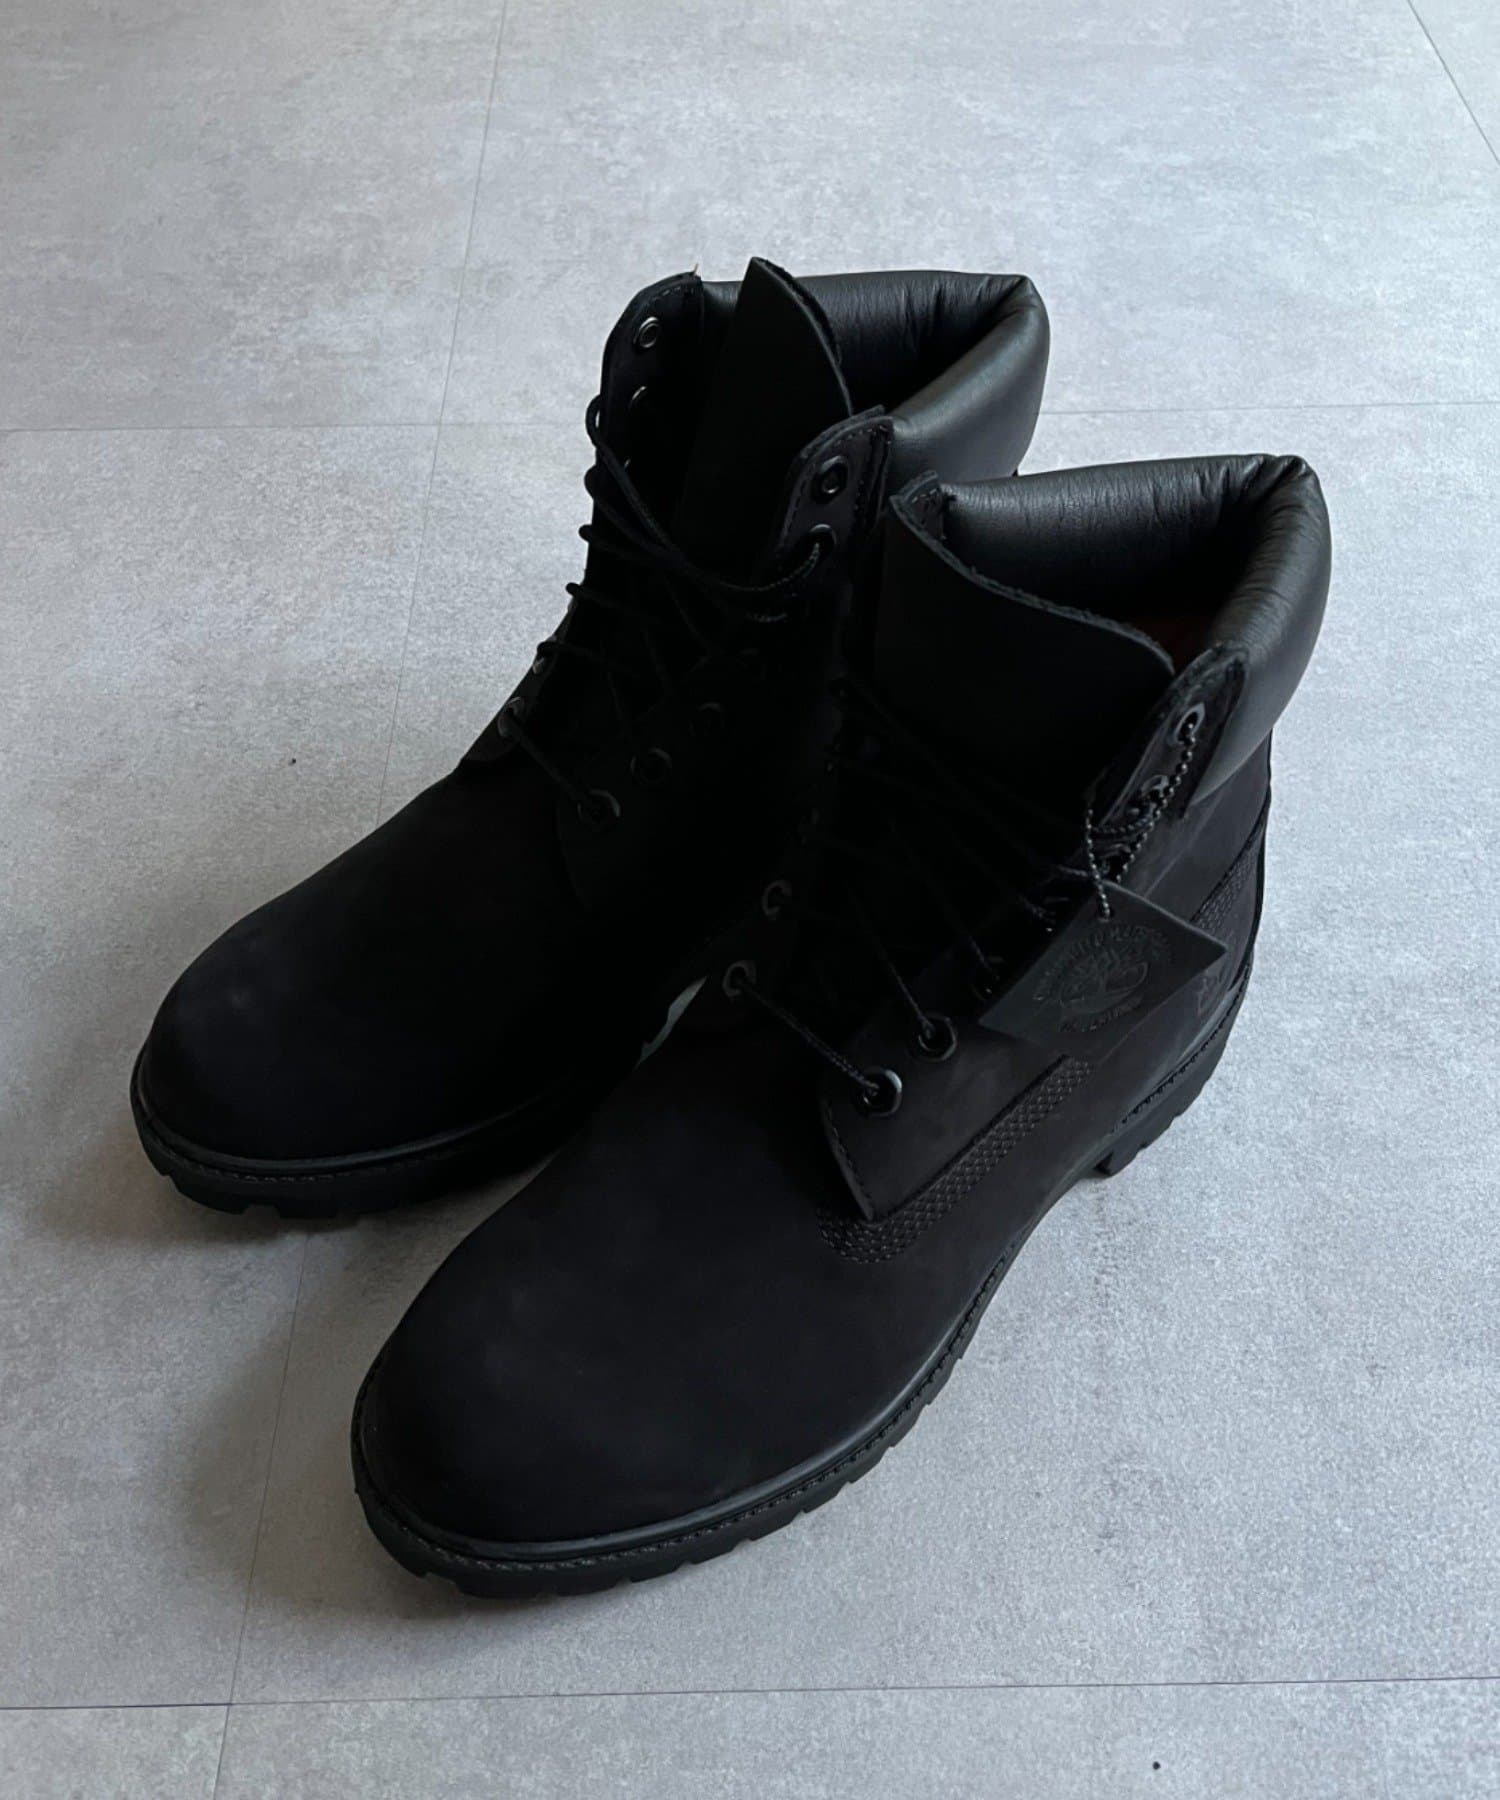 CIAOPANIC(チャオパニック) メンズ 【Timberland】6in Premium Waterproof Boots ブラック